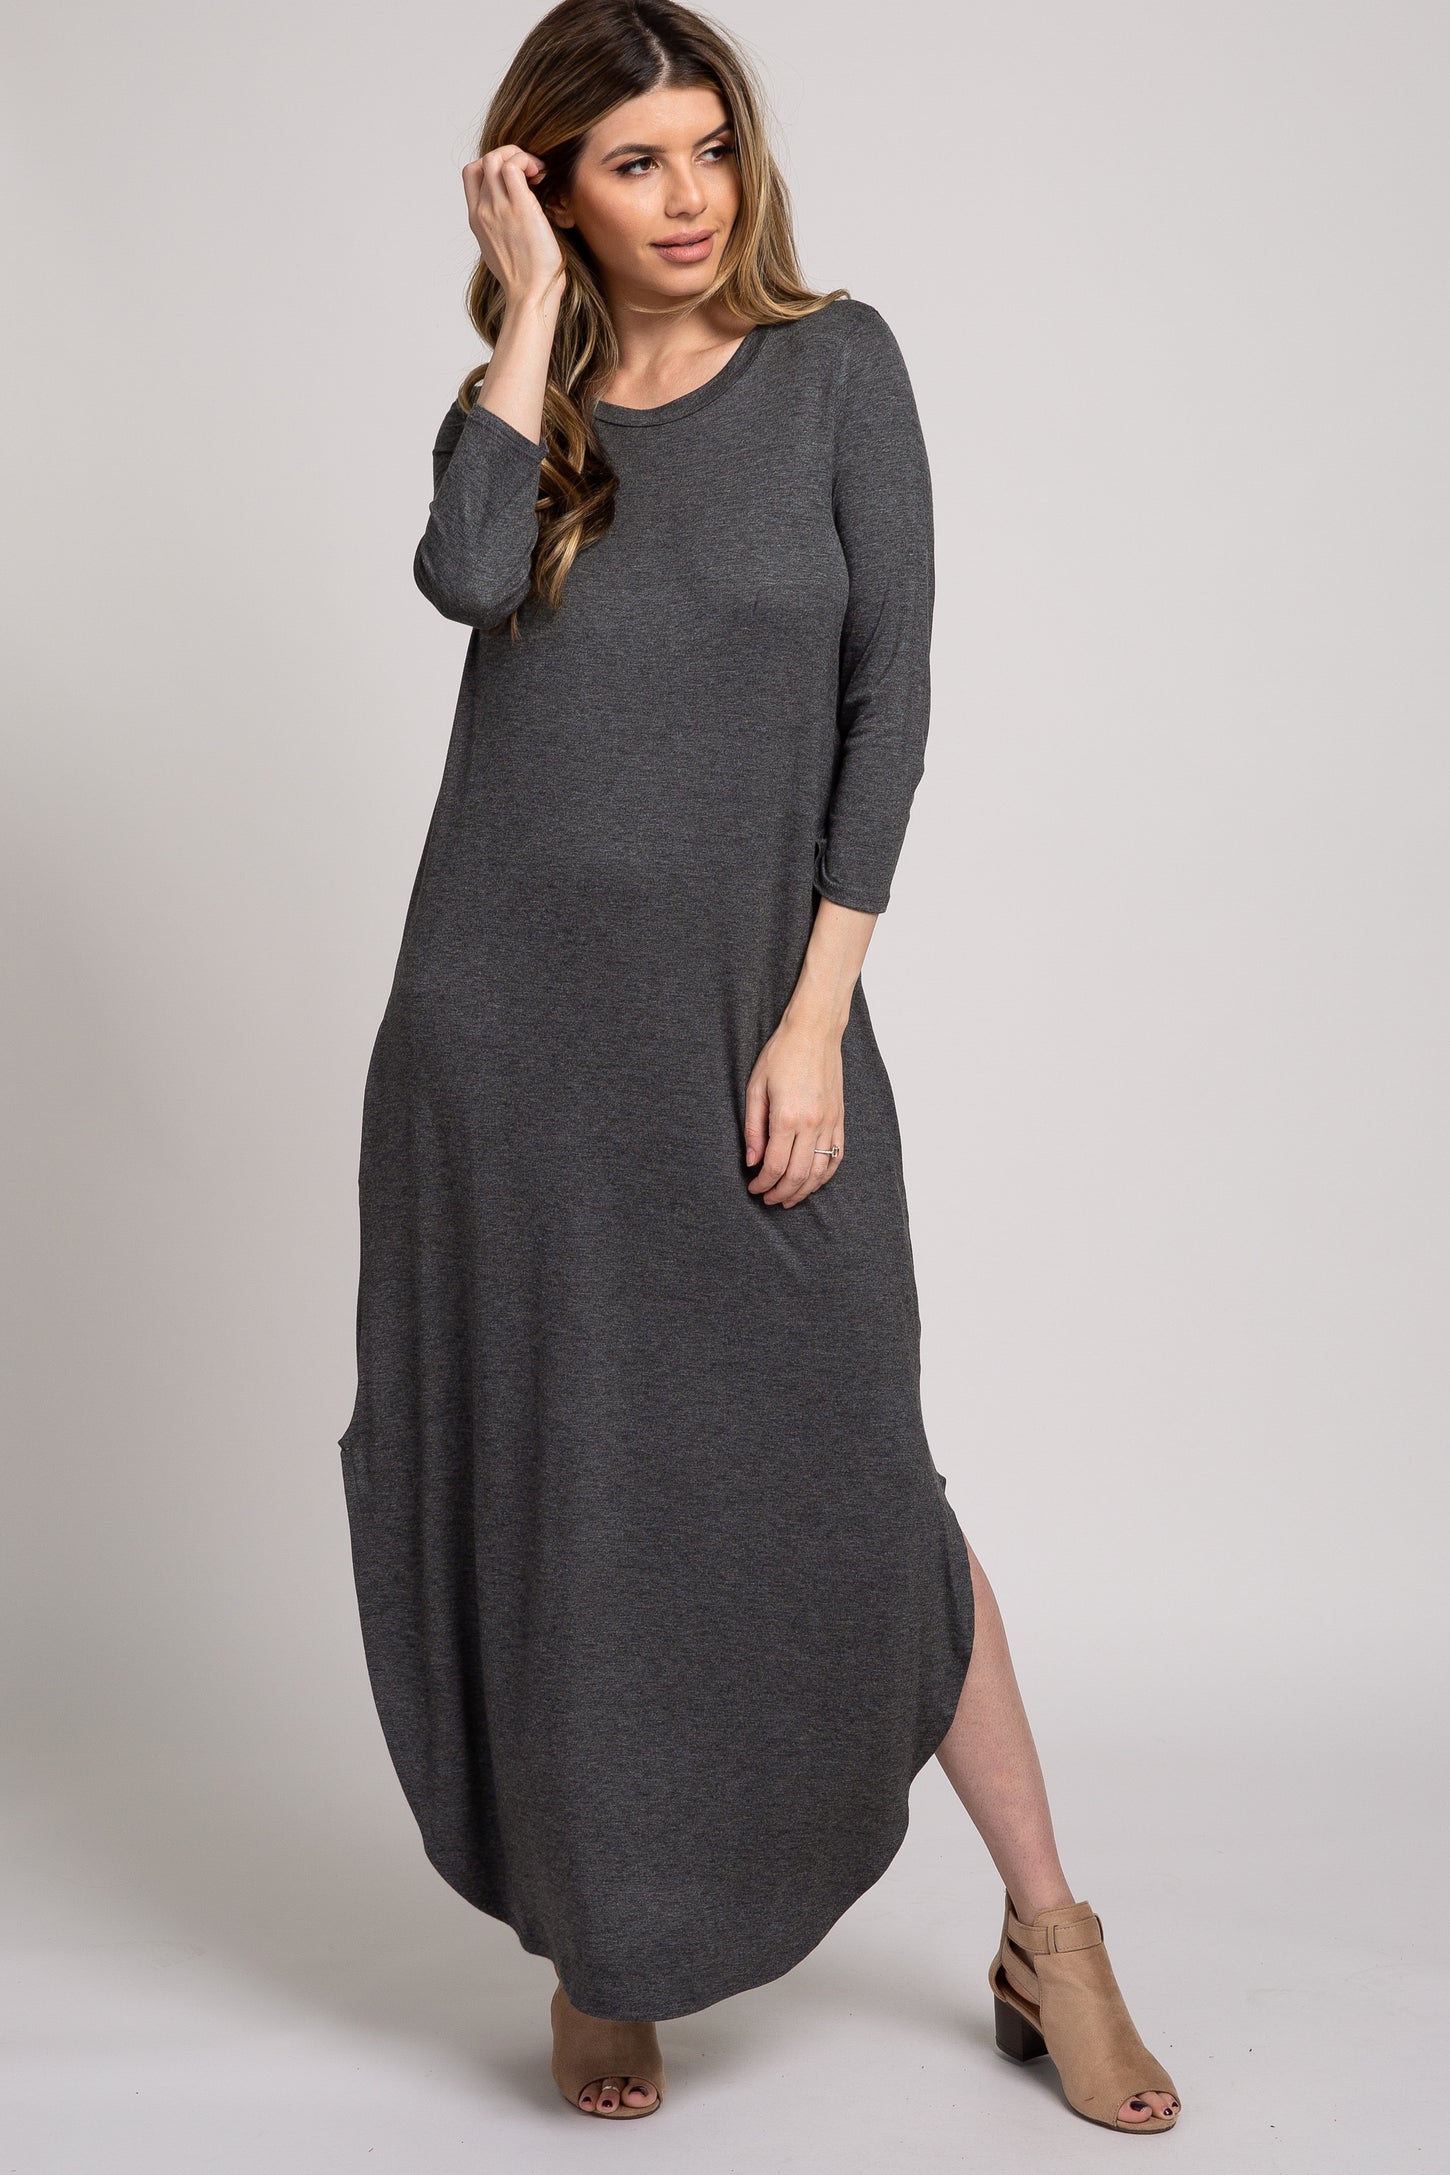 Charcoal 3/4 Sleeve Side Slit Maxi Dress